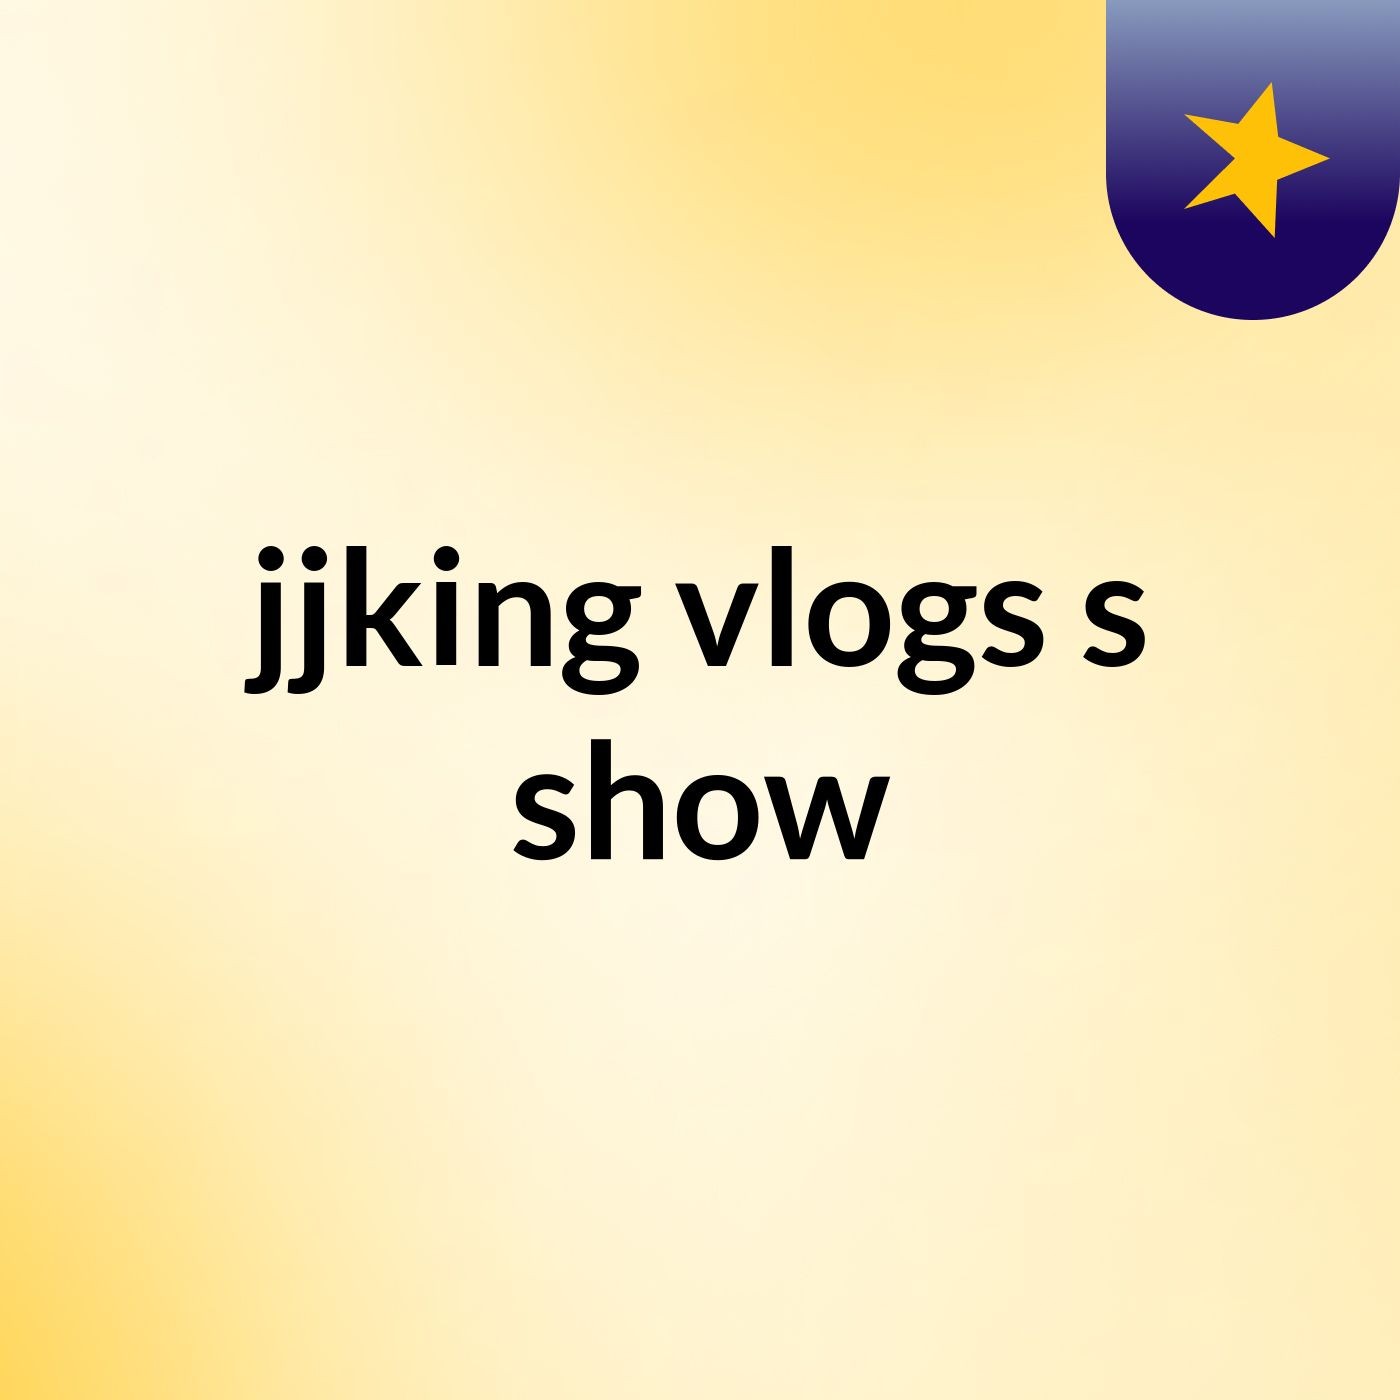 Episode 2 - jjking vlogs's show